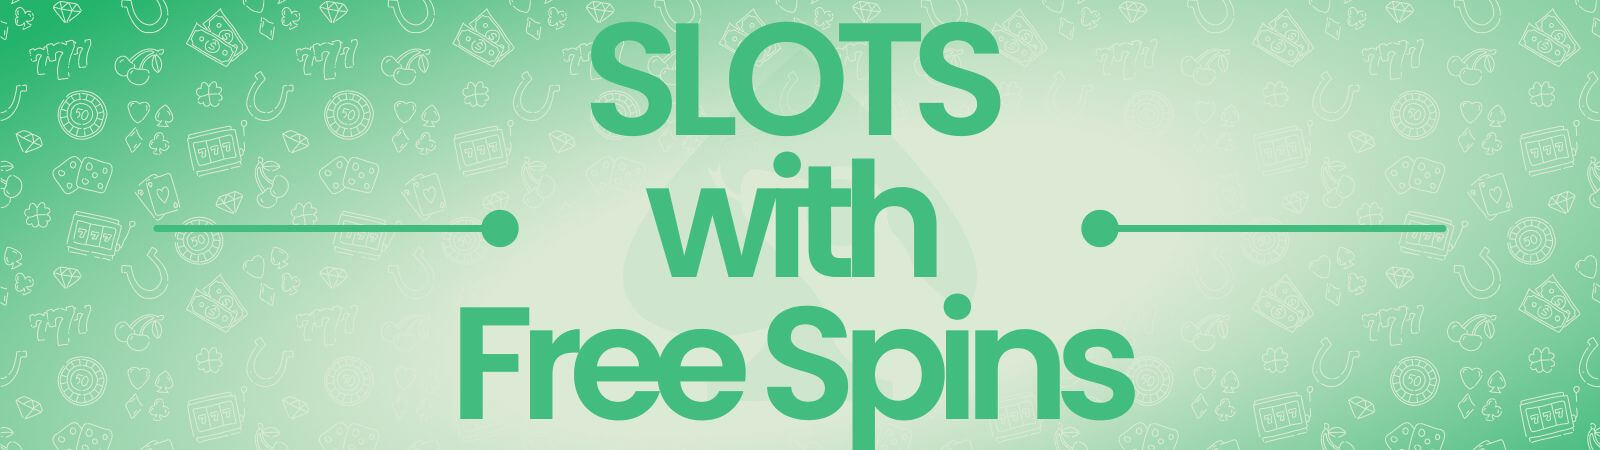 online slots free spins no deposit